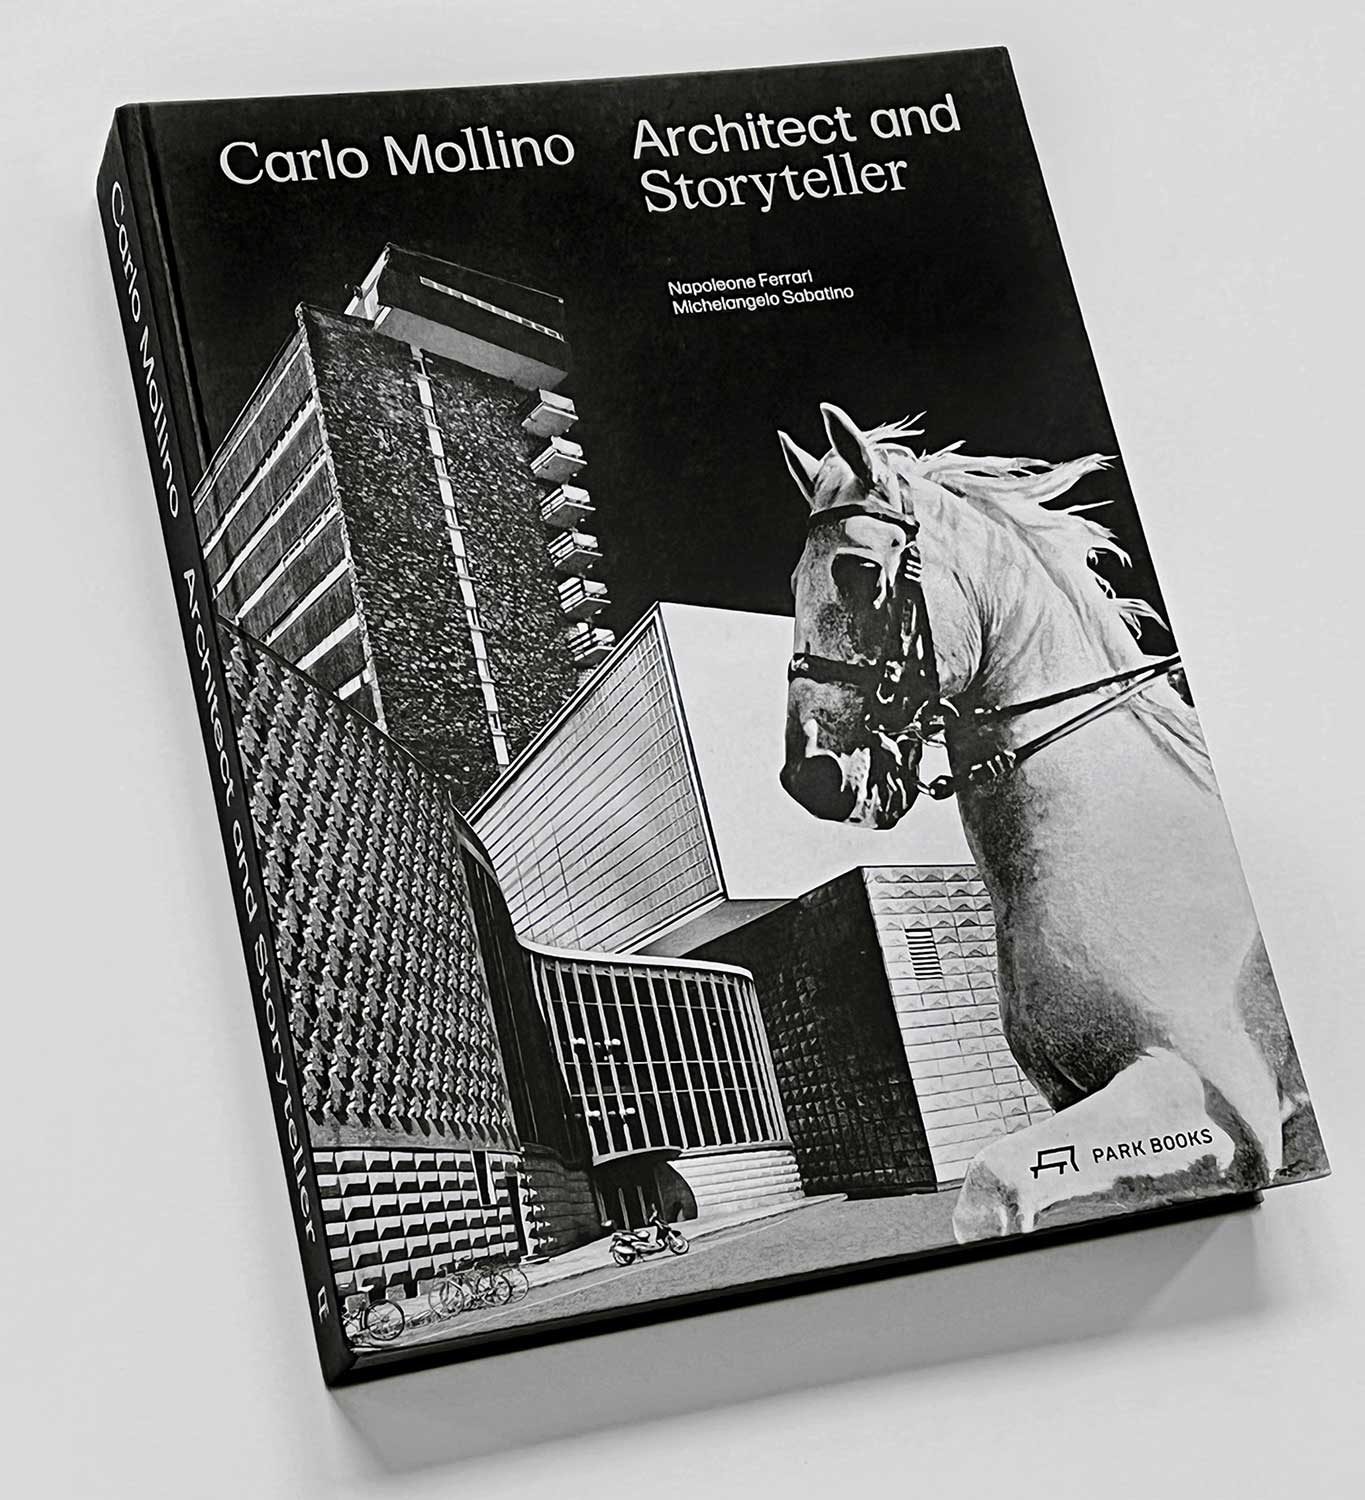 Carlo Mollino: Architect and Storyteller book cover.